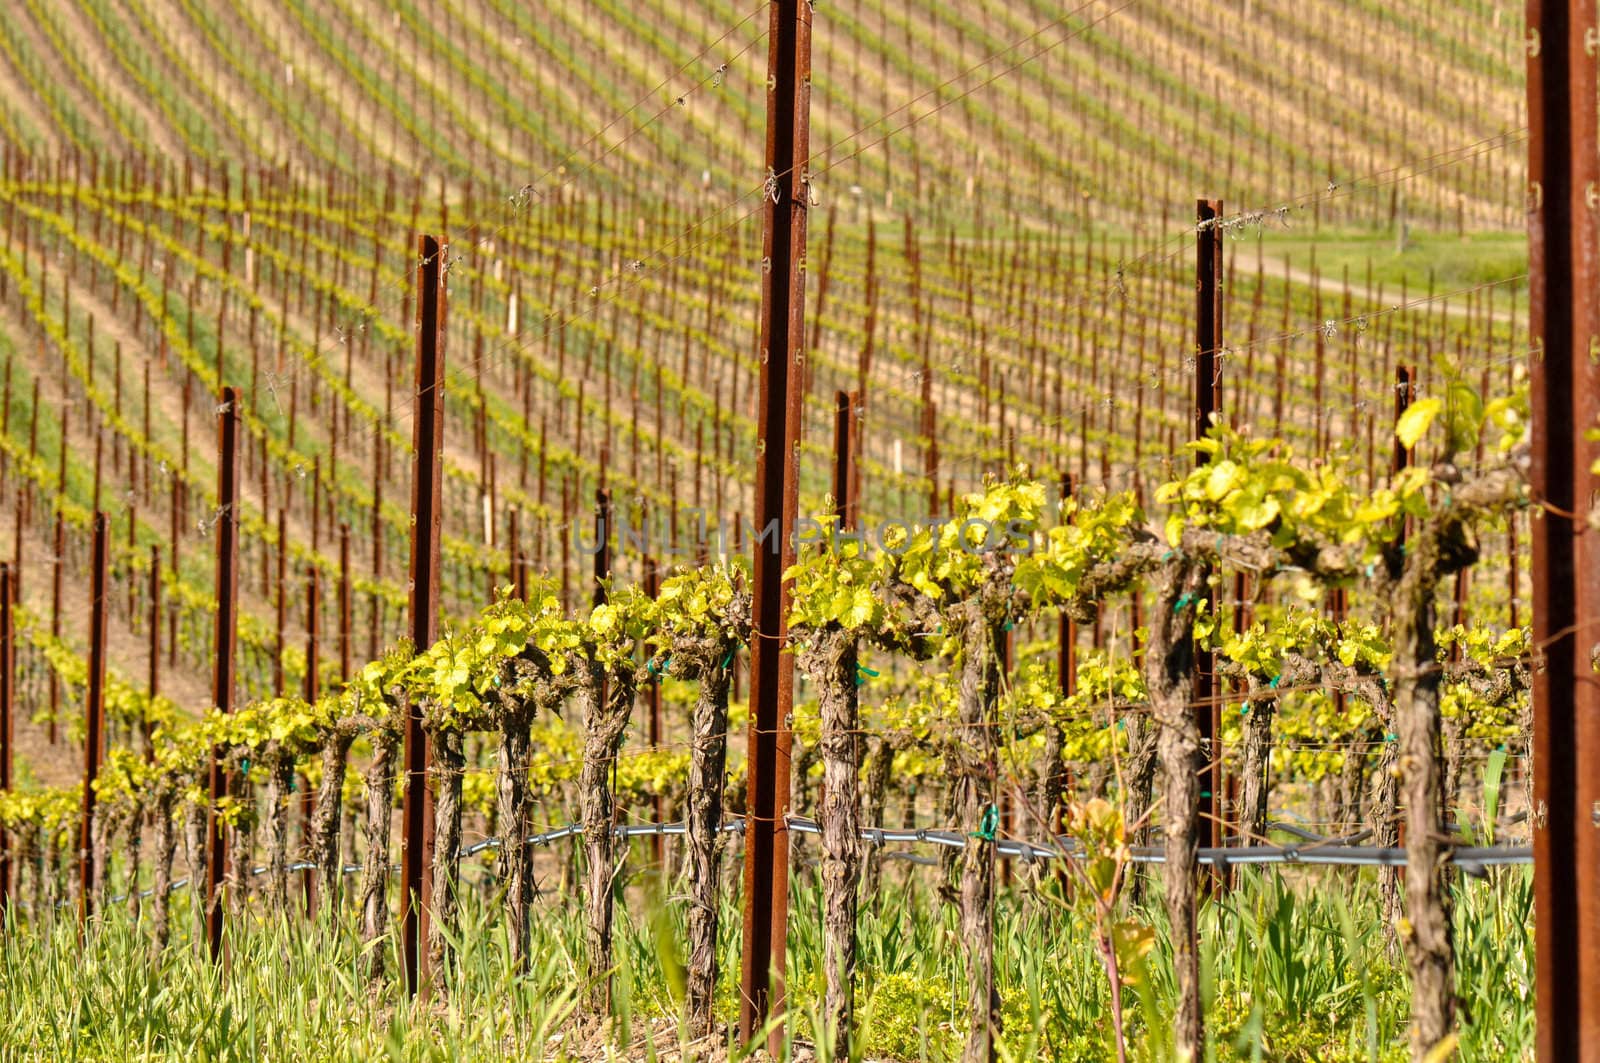 Grapes Vines in Vineyard during Spring by bbourdages